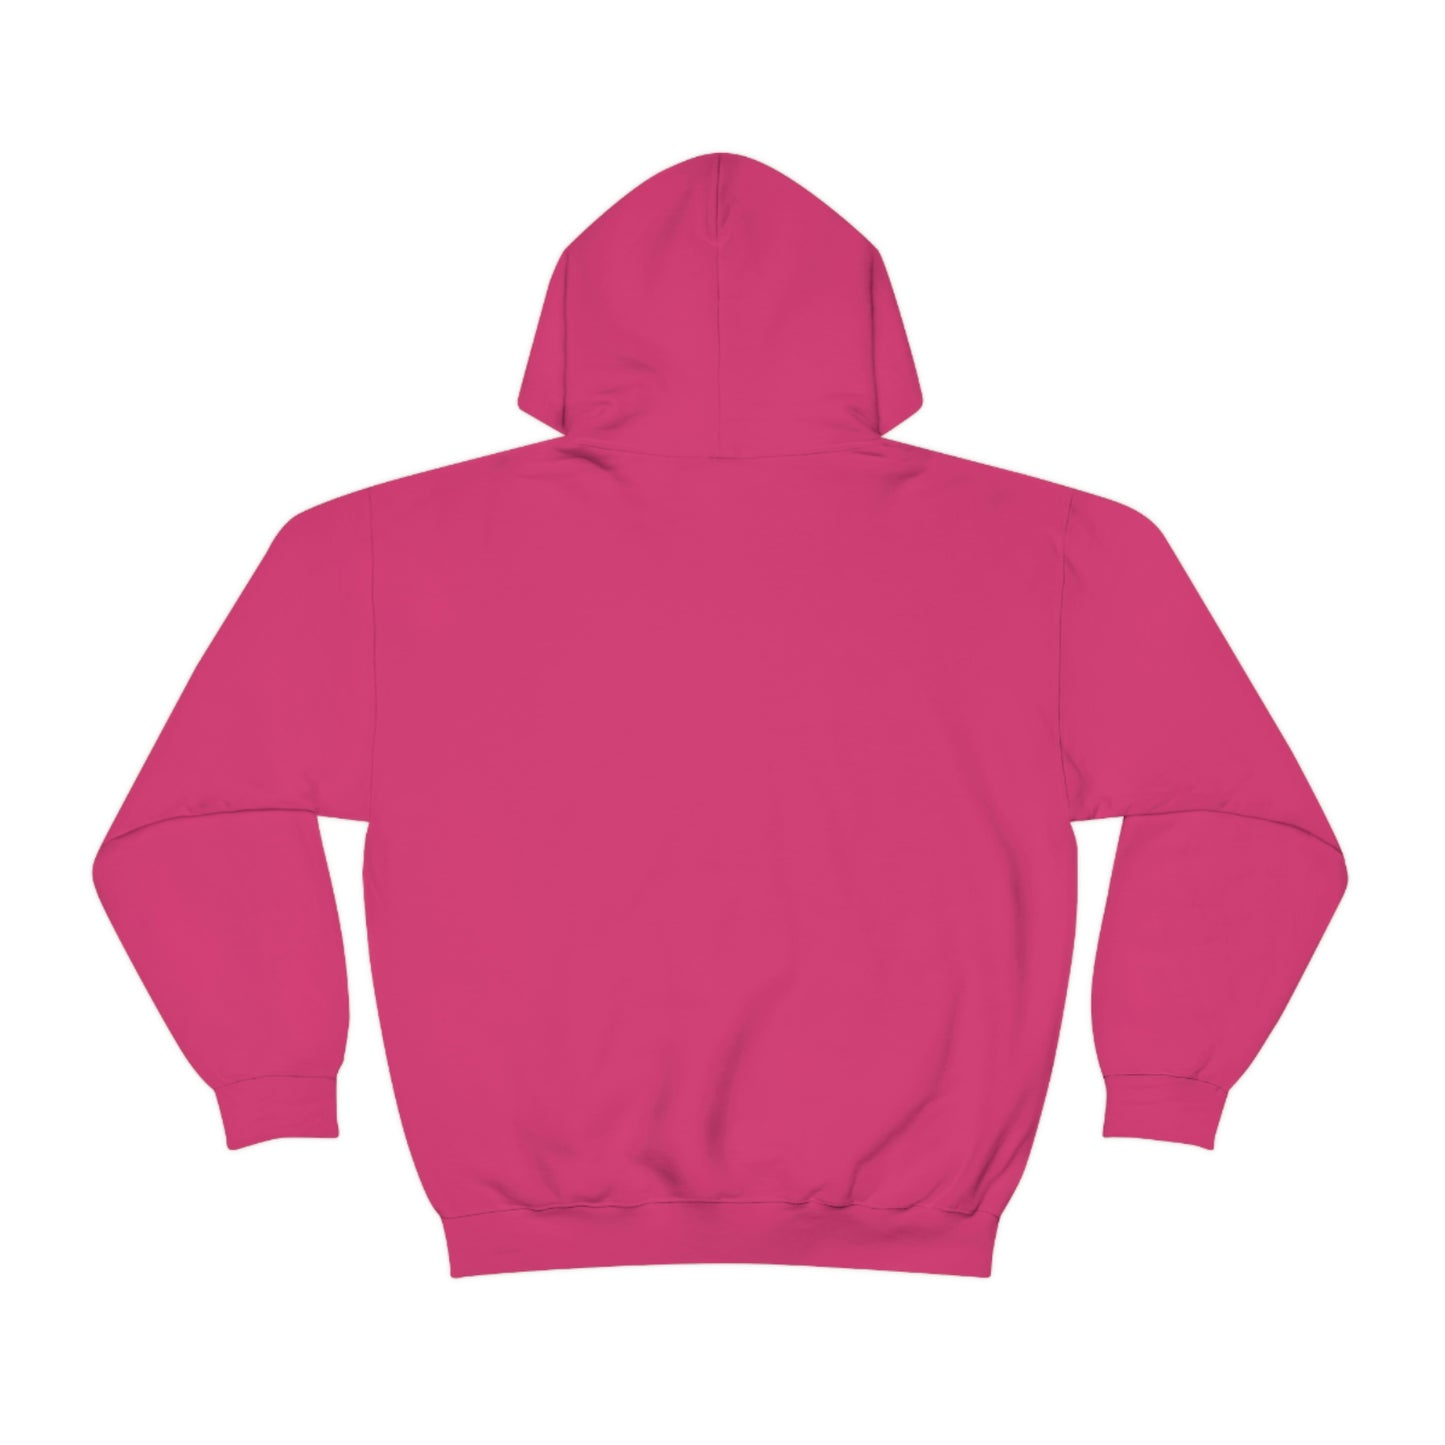 TRiNiTY Pappy Legba - Unisex Heavy Blend™ Hooded Sweatshirt